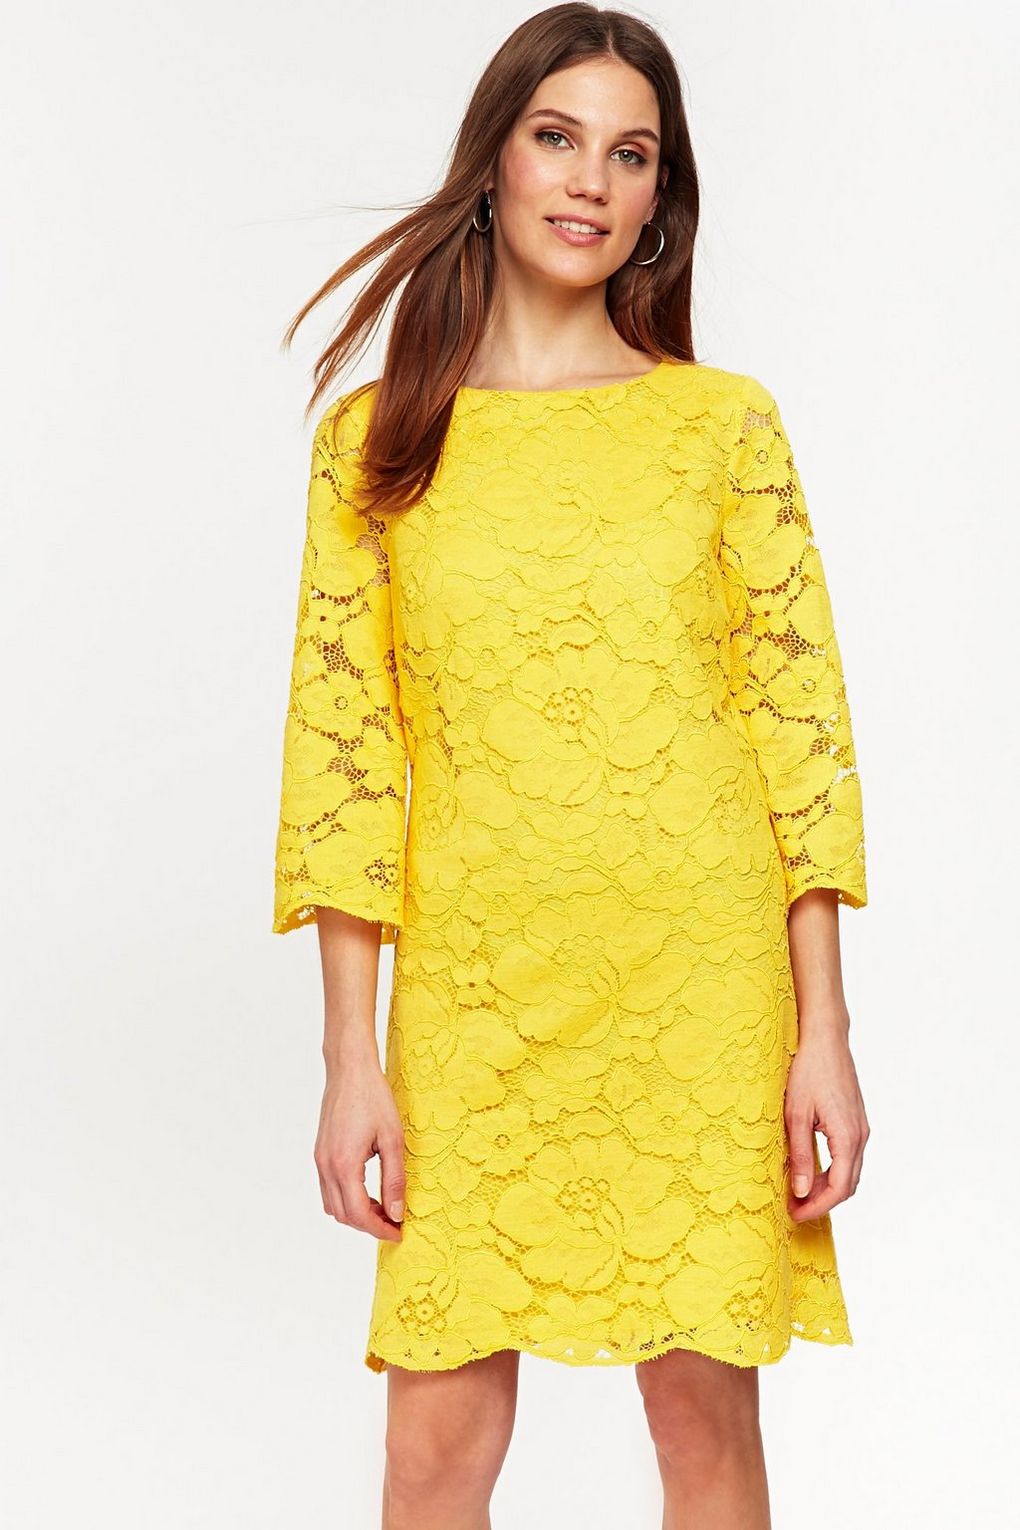 Yellow Lace Dress | DressedUpGirl.com